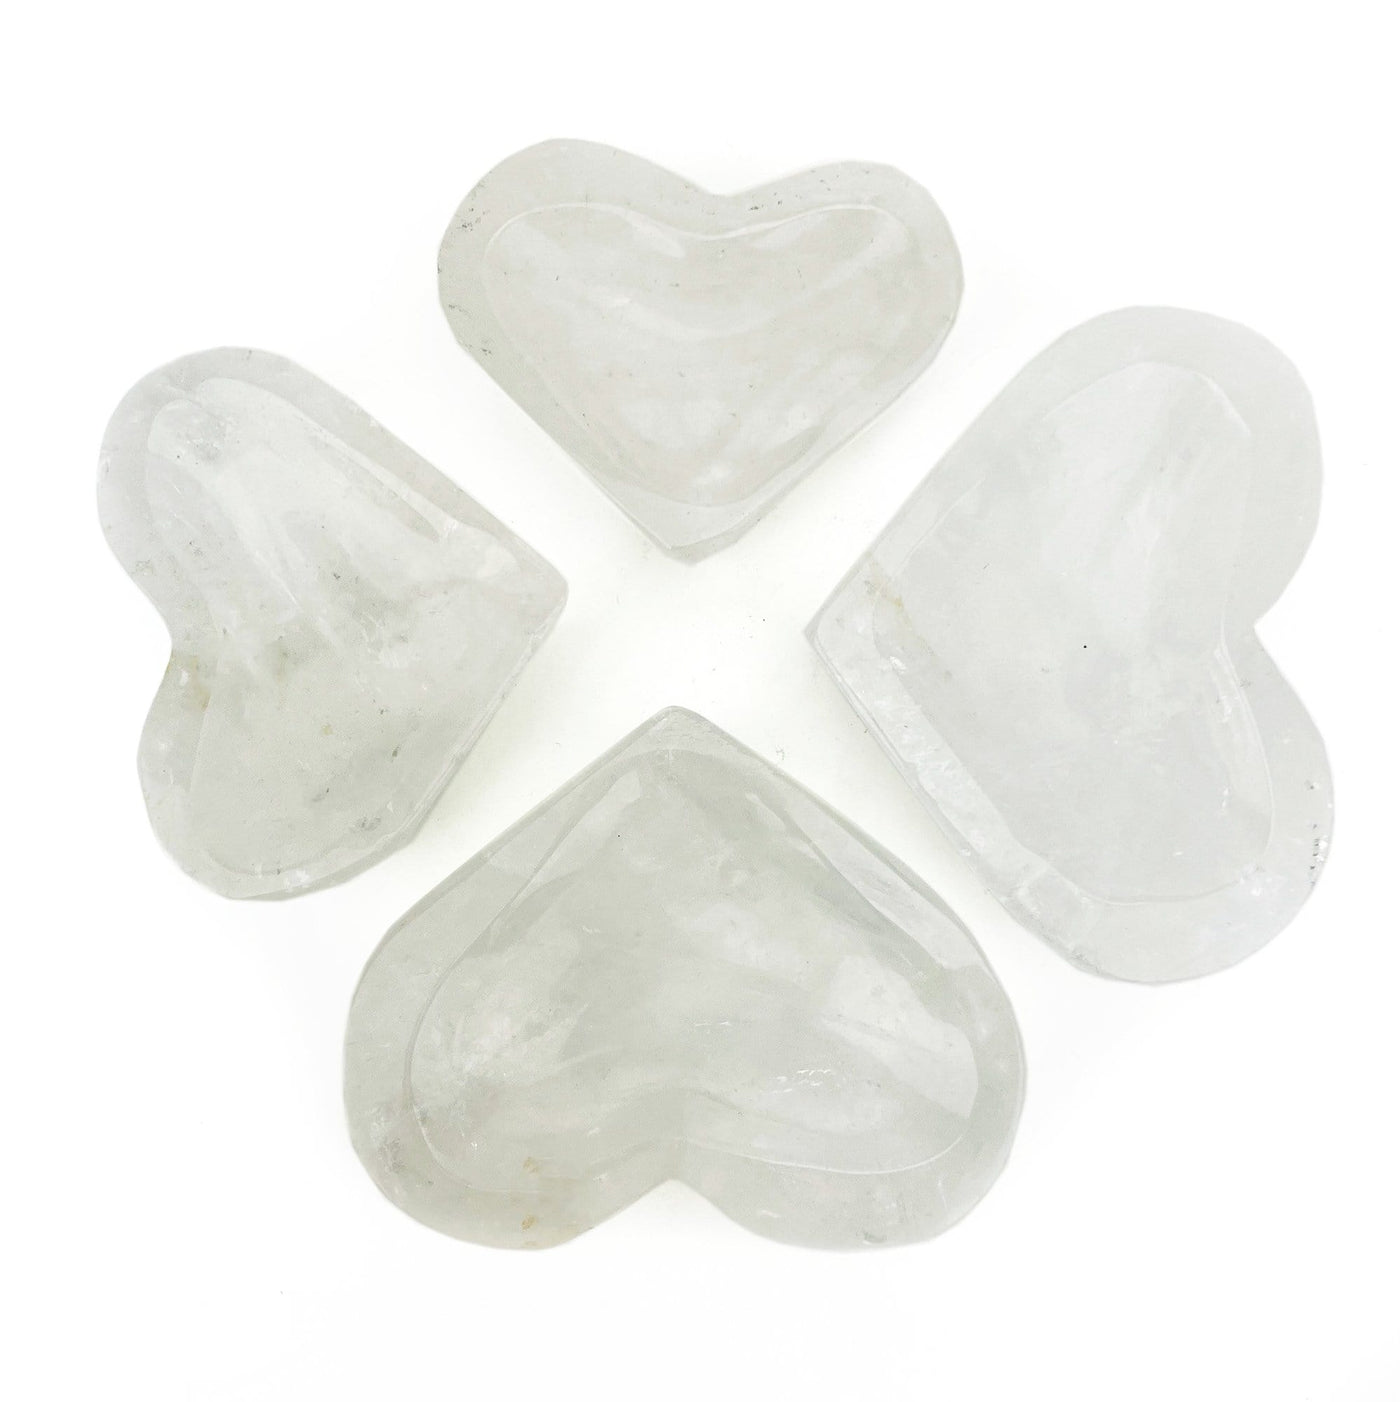 Crystal Quartz Heart Bowls displayed on white background